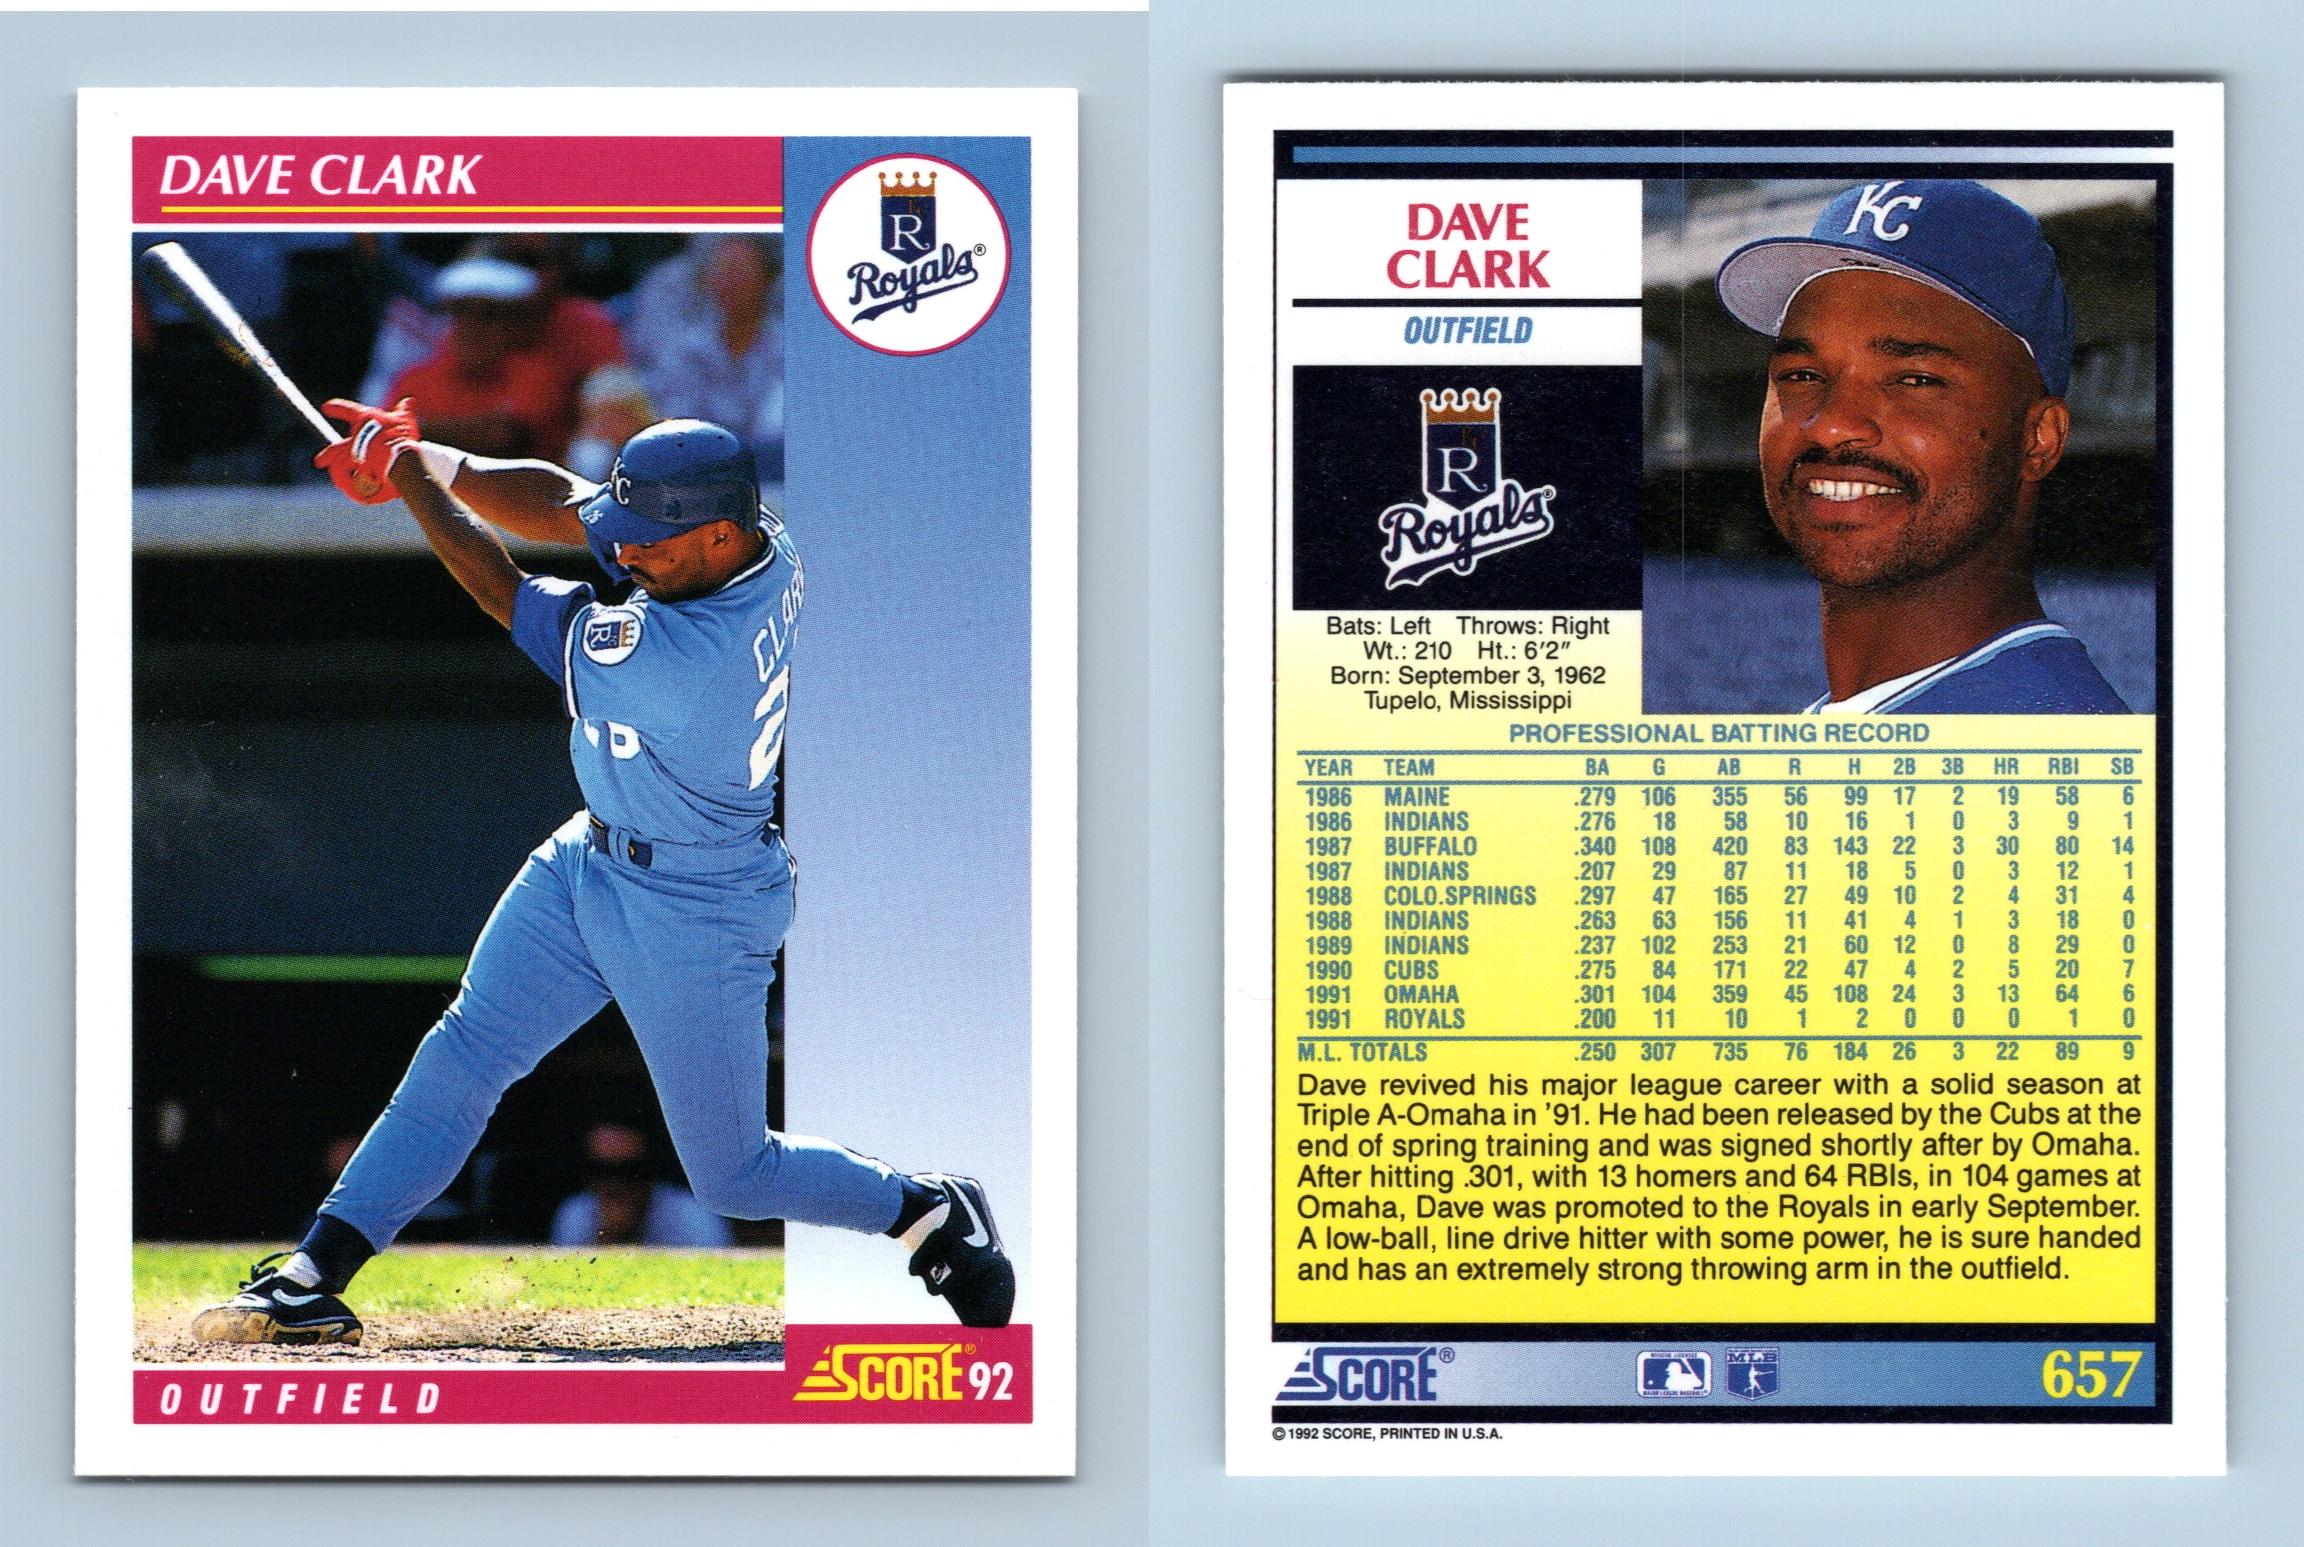 Jack Morris - Twins - #652 Score 1992 Baseball Trading Card